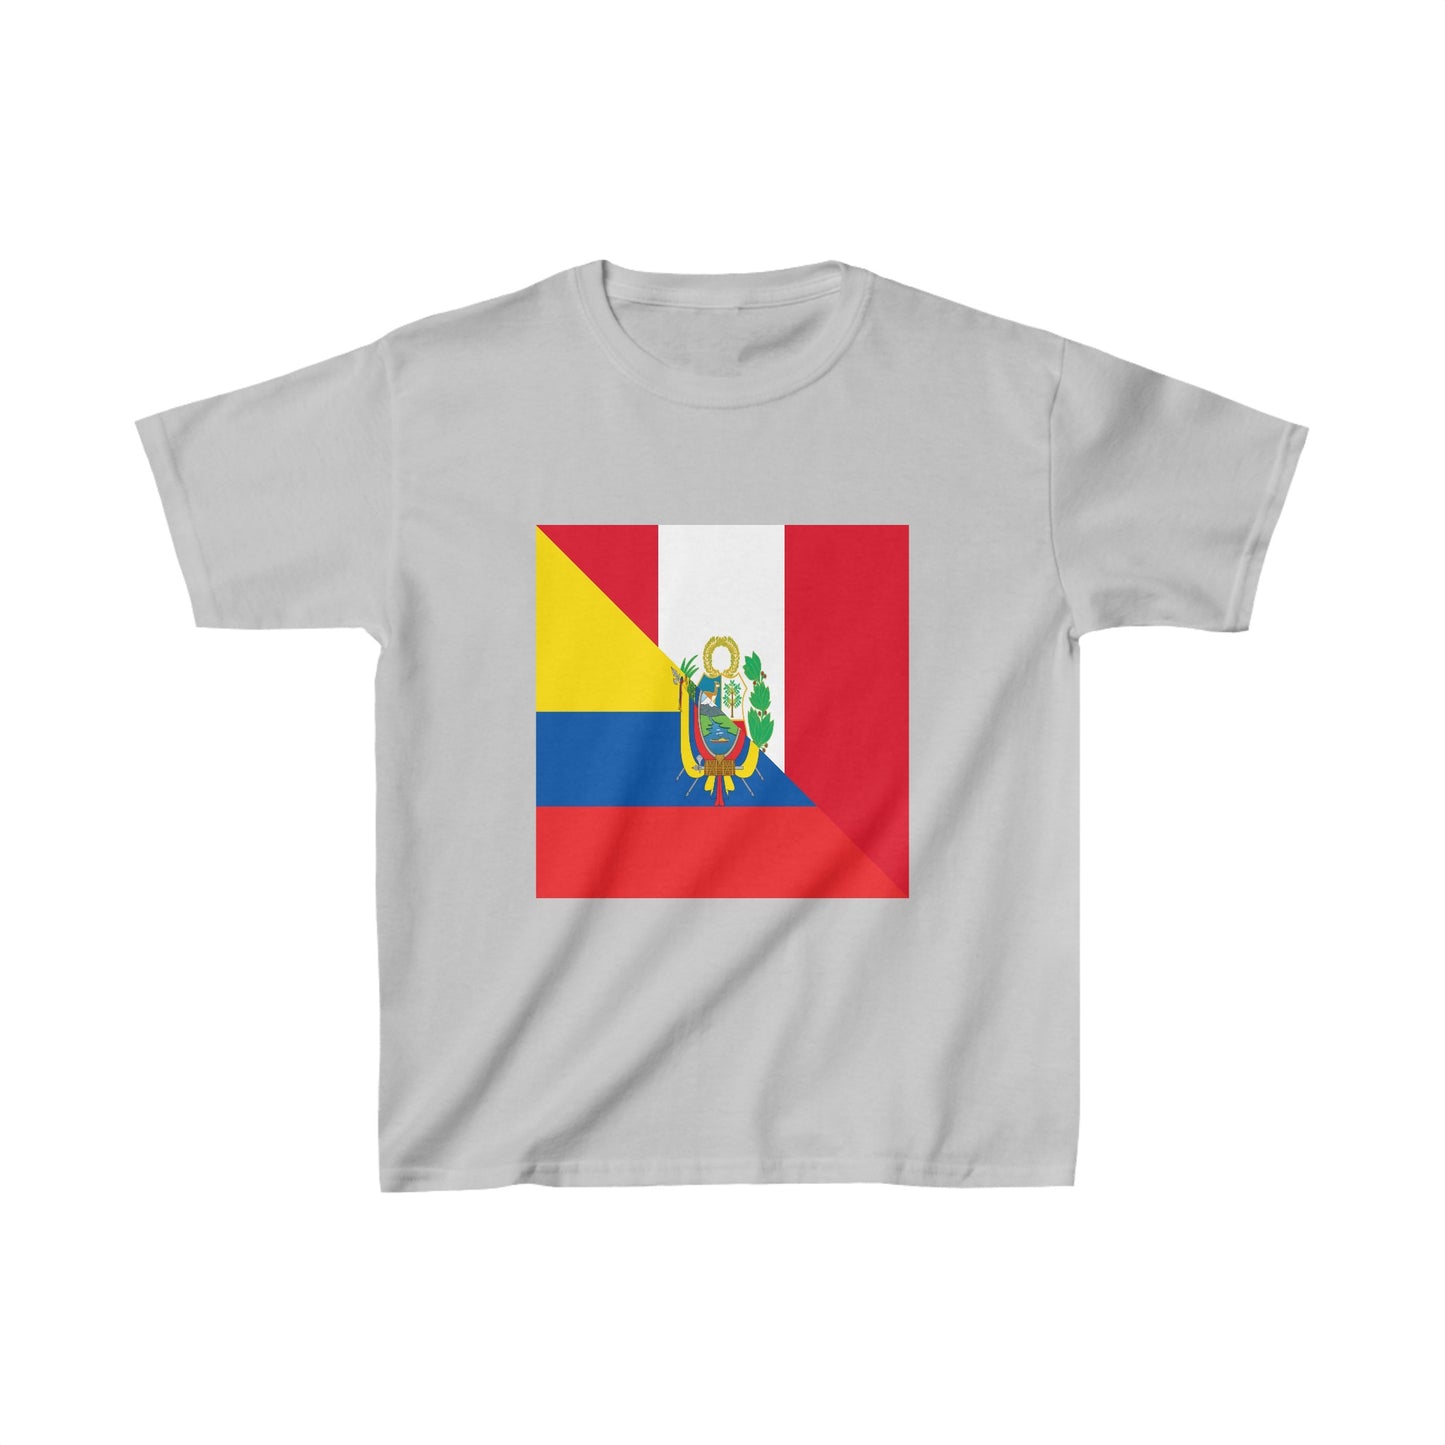 Kids Peru Ecuador Flag Peruvian Ecuadorian T-Shirt | Unisex Tee Shirt